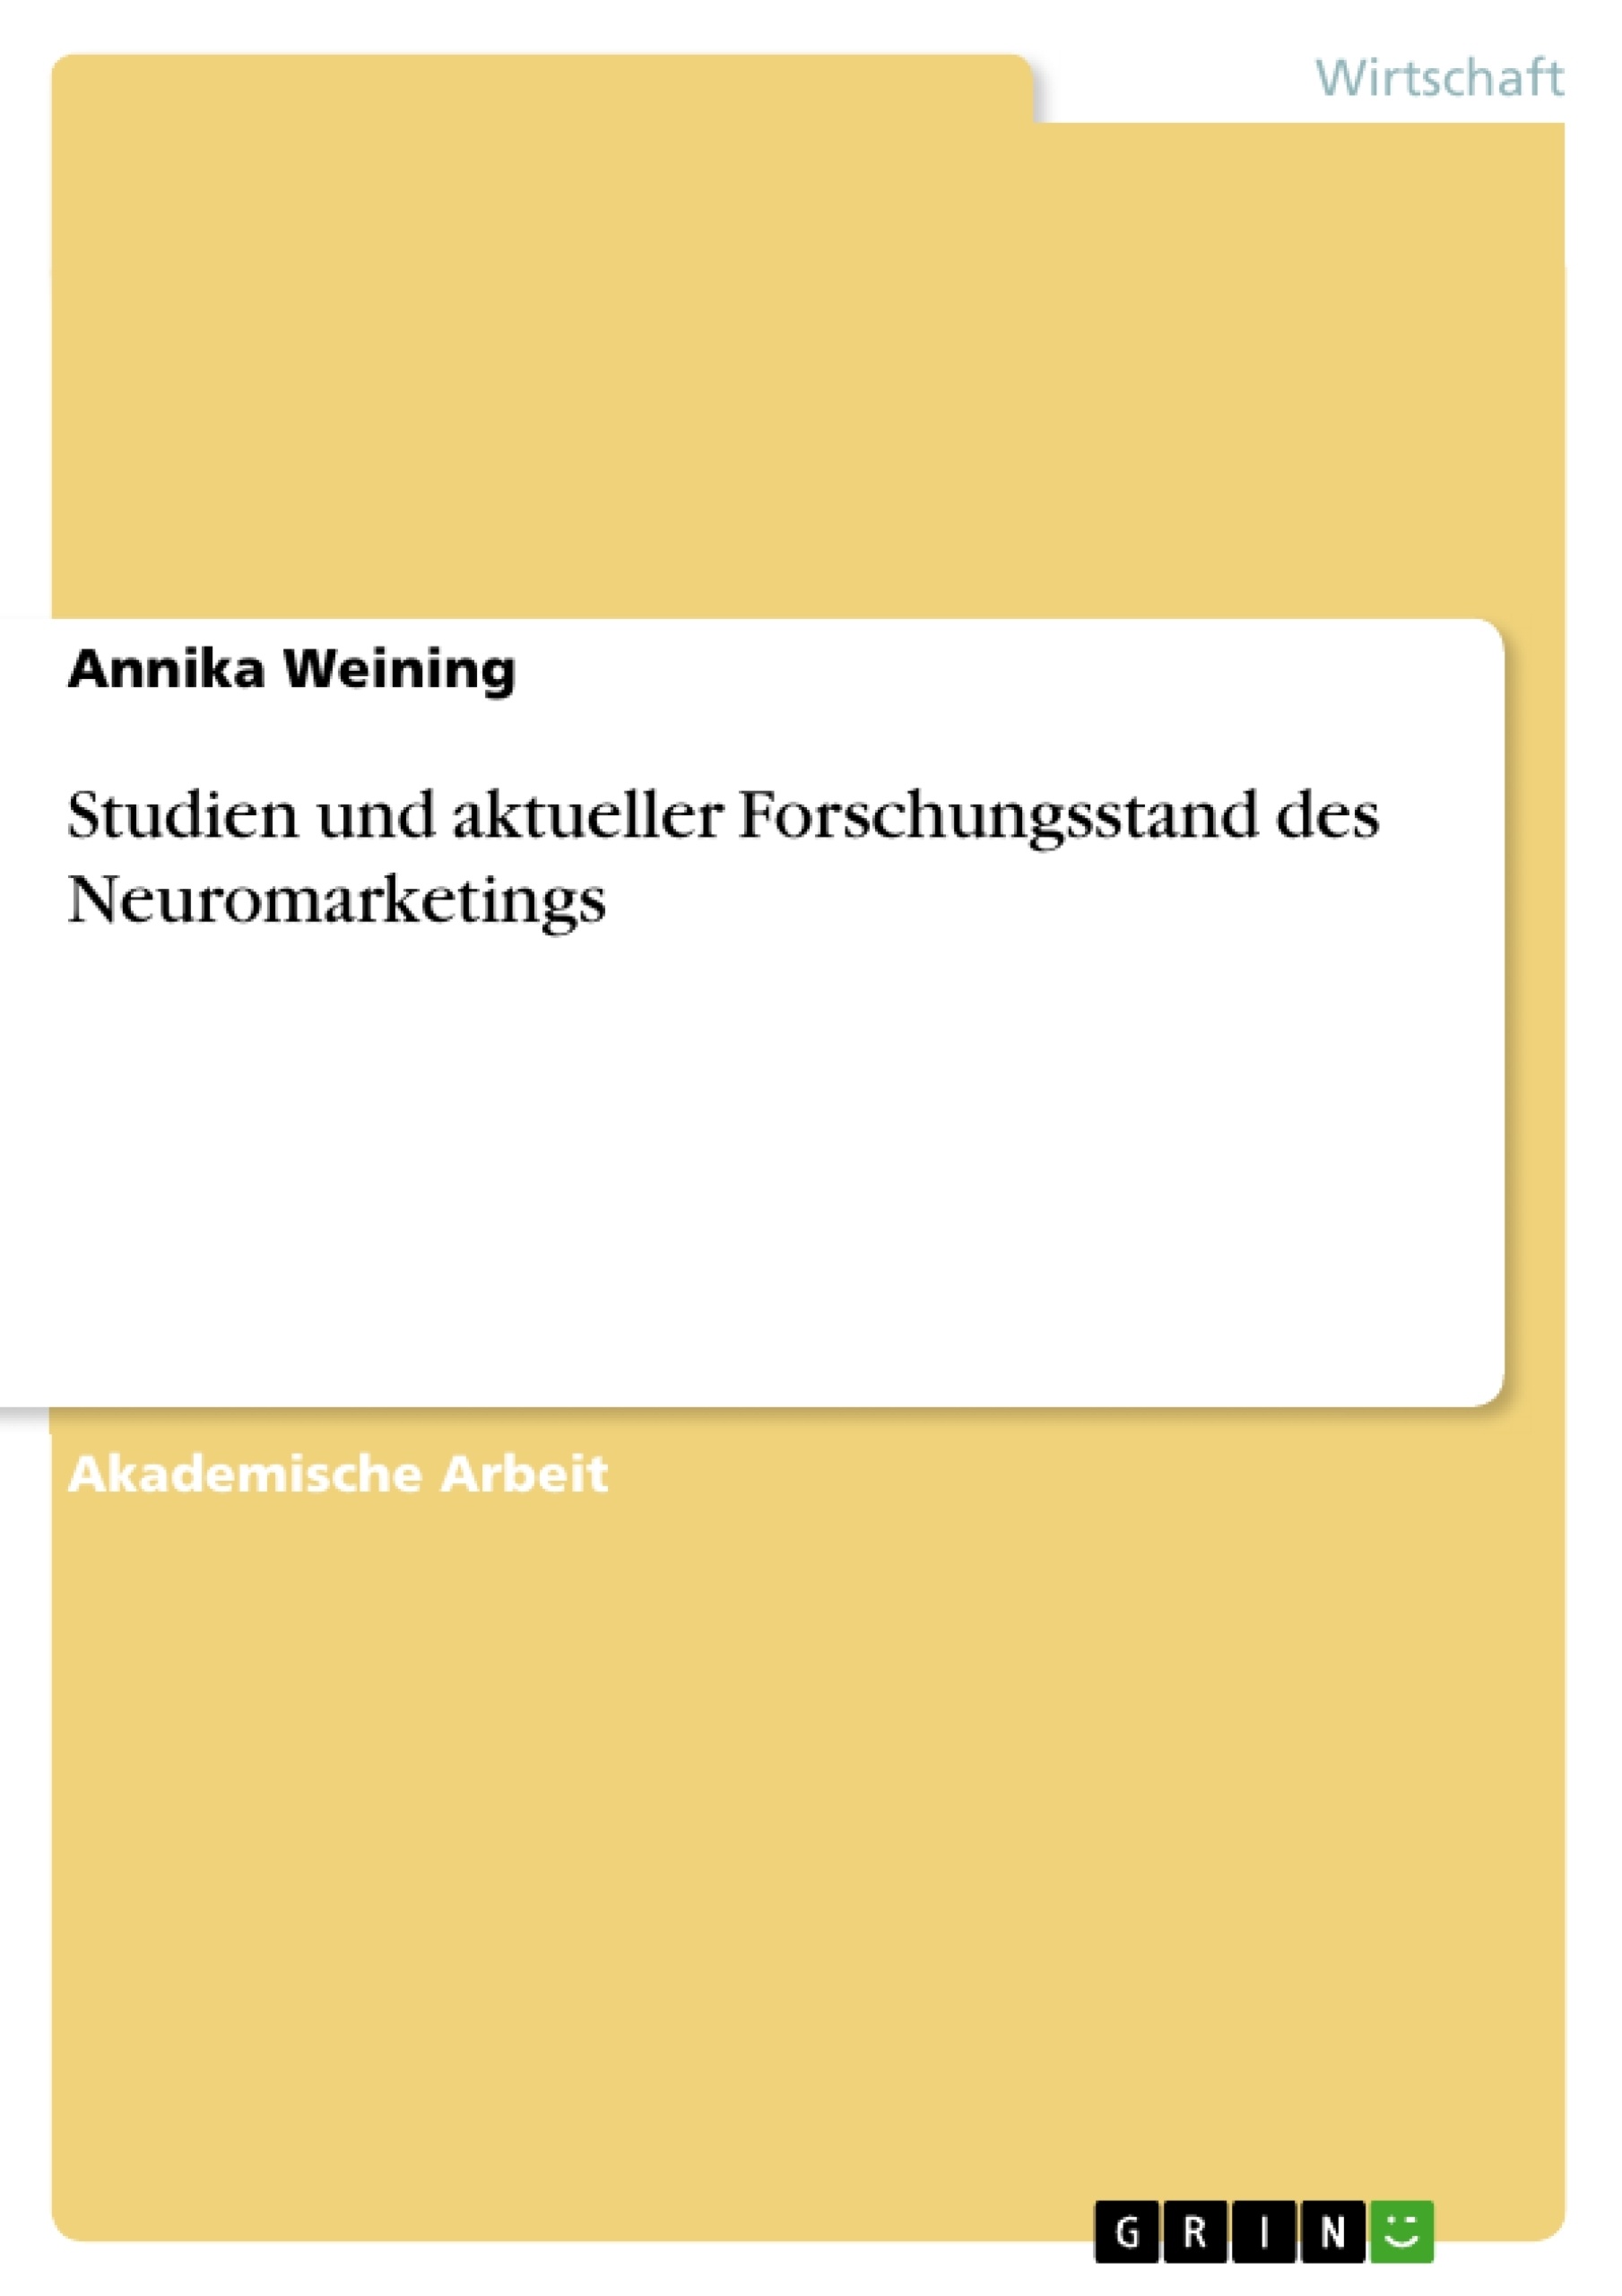 Título: Studien und aktueller Forschungsstand des Neuromarketings